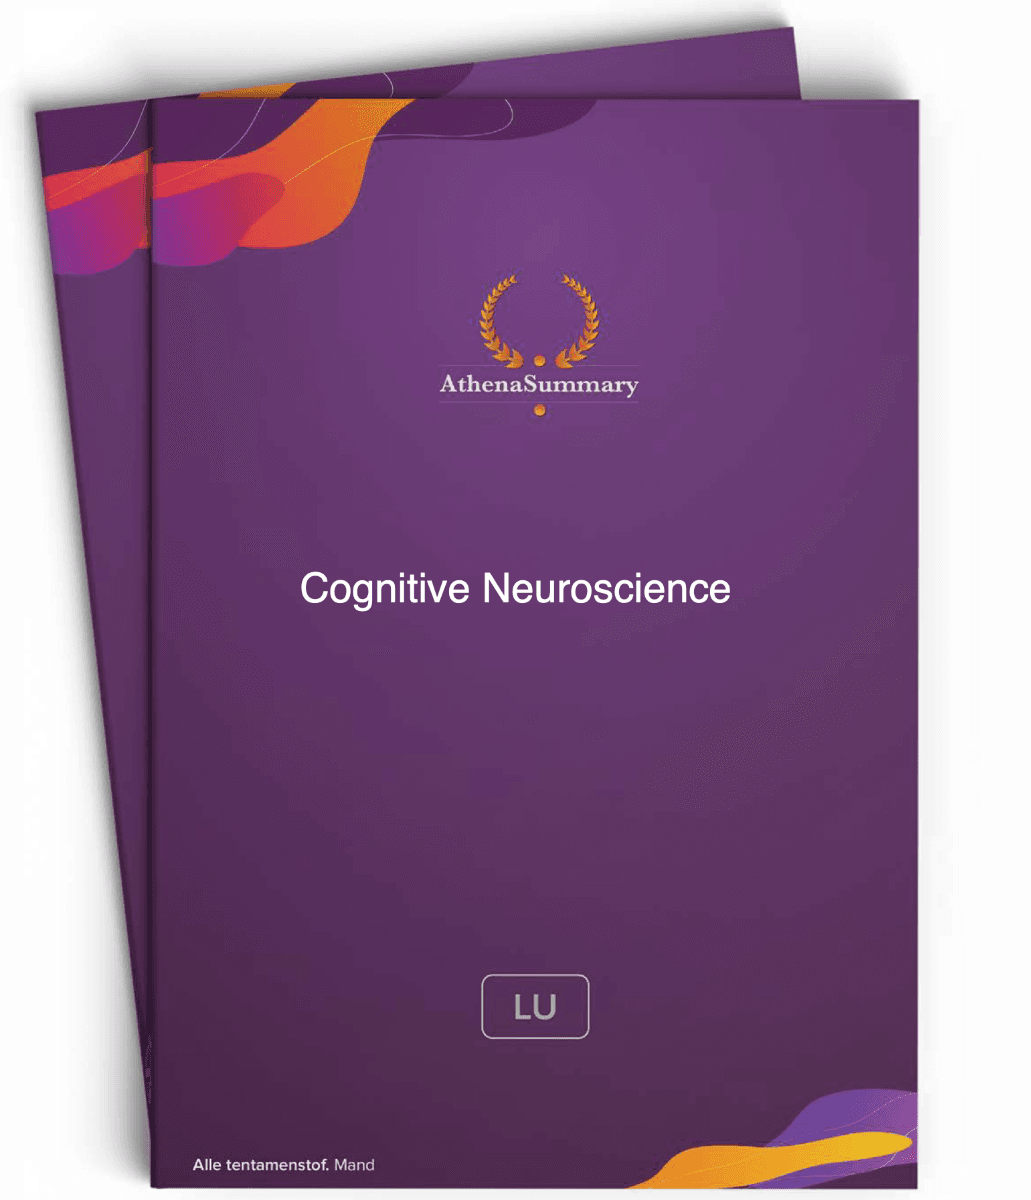 Literature Summary - Cognitive Neuroscience